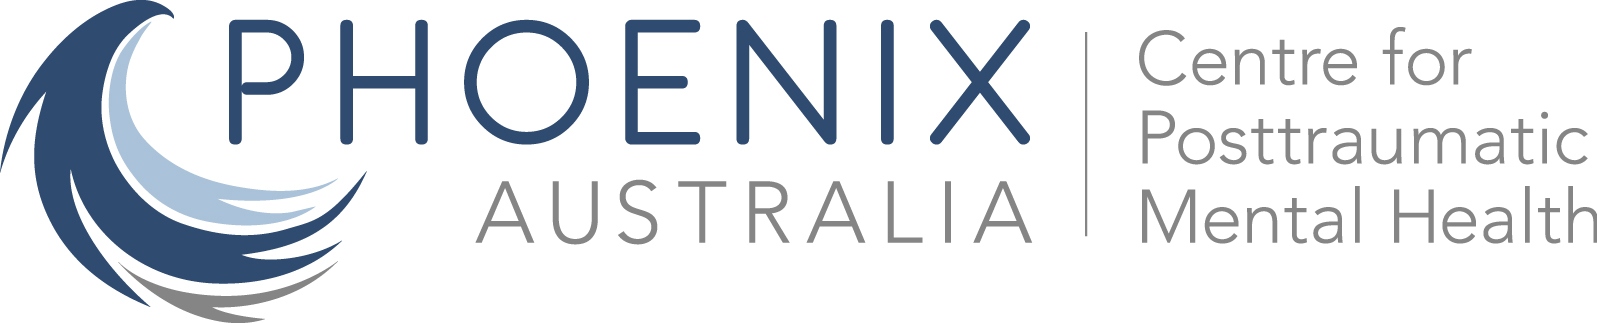 Phoenix Australia Centre for Posttraumatic Mental Health Inc logo